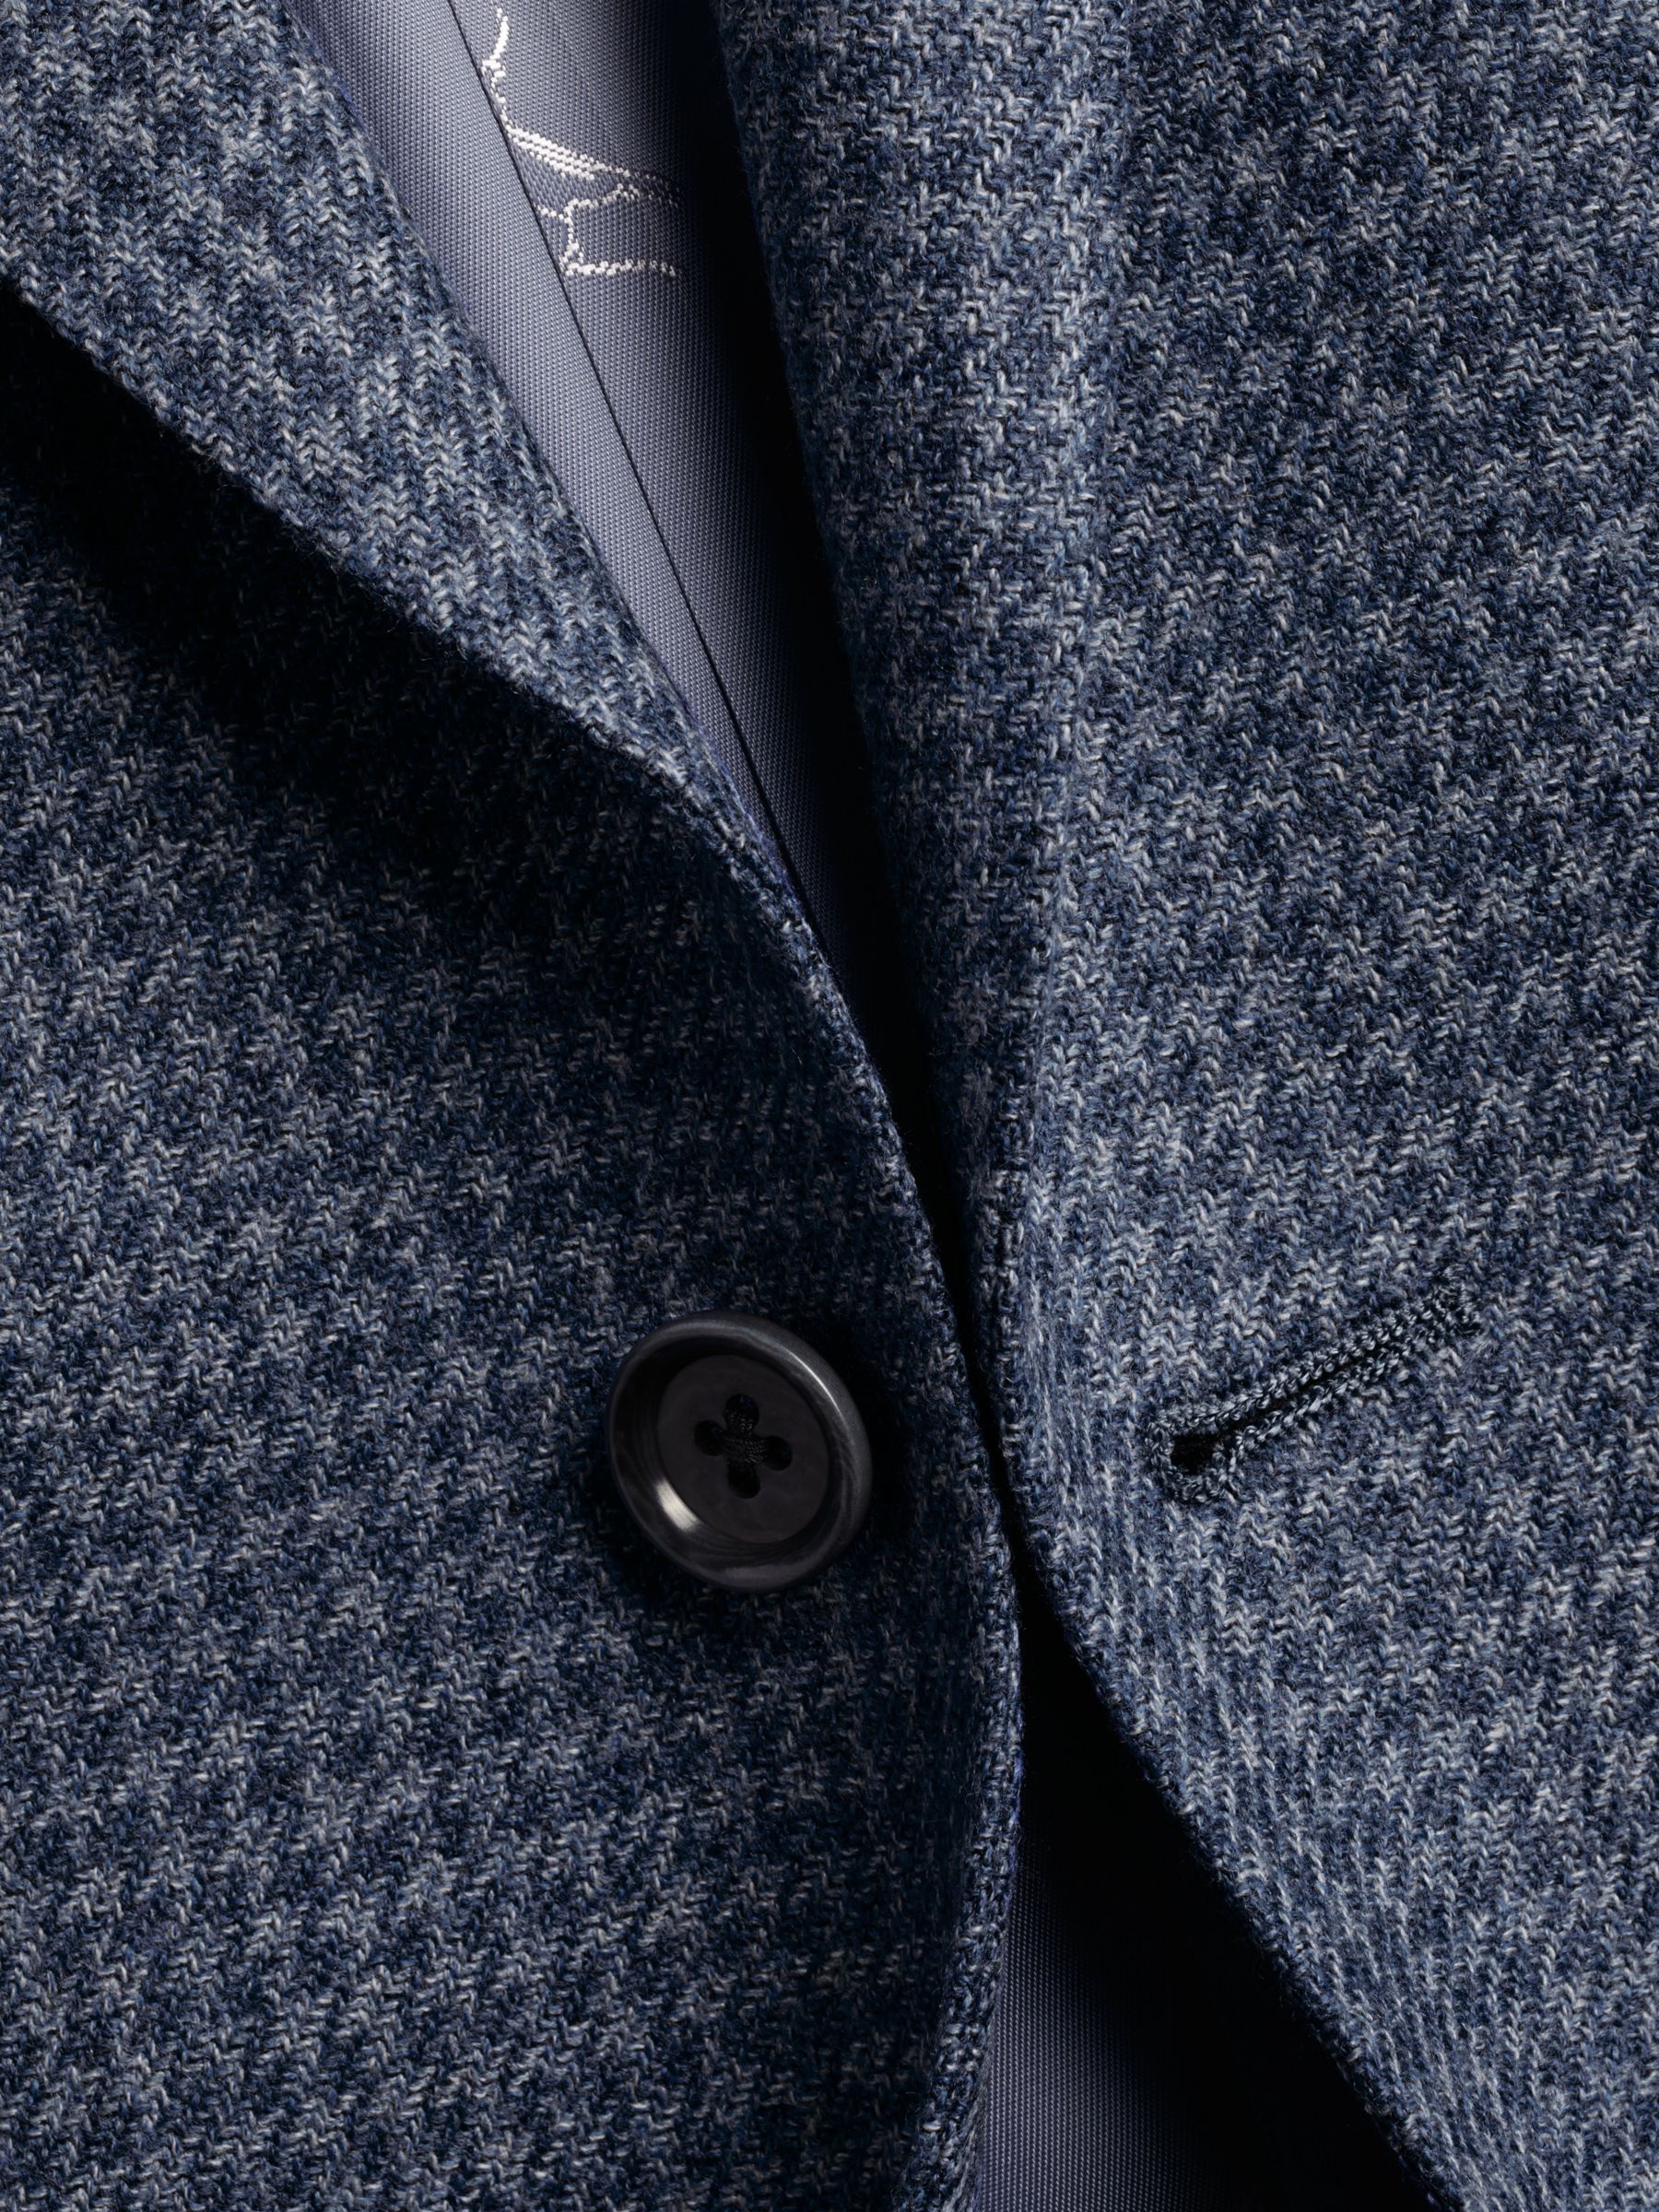 Charles Tyrwhitt Puppytooth Wool Blend Slim Fit Jacket, Steel Blue, 38R